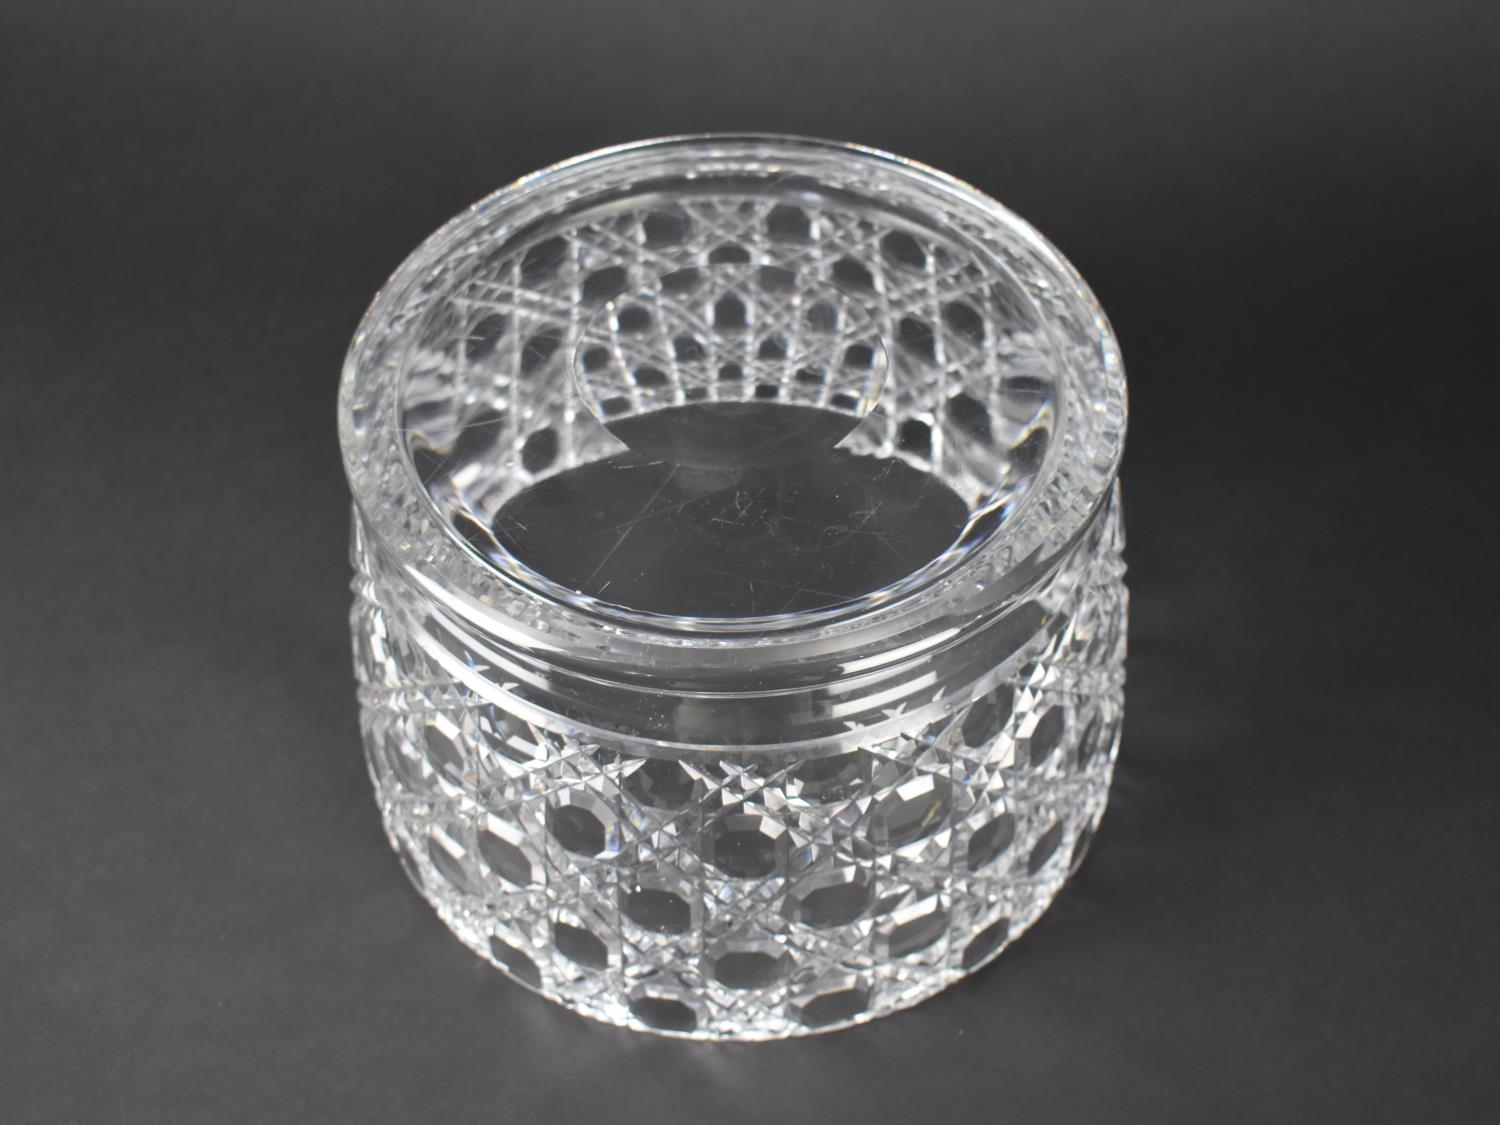 A Large Nice Quality Hobnail Cut Glass Bowl with Polished Pontil Base, 14.5cm high - Image 3 of 3